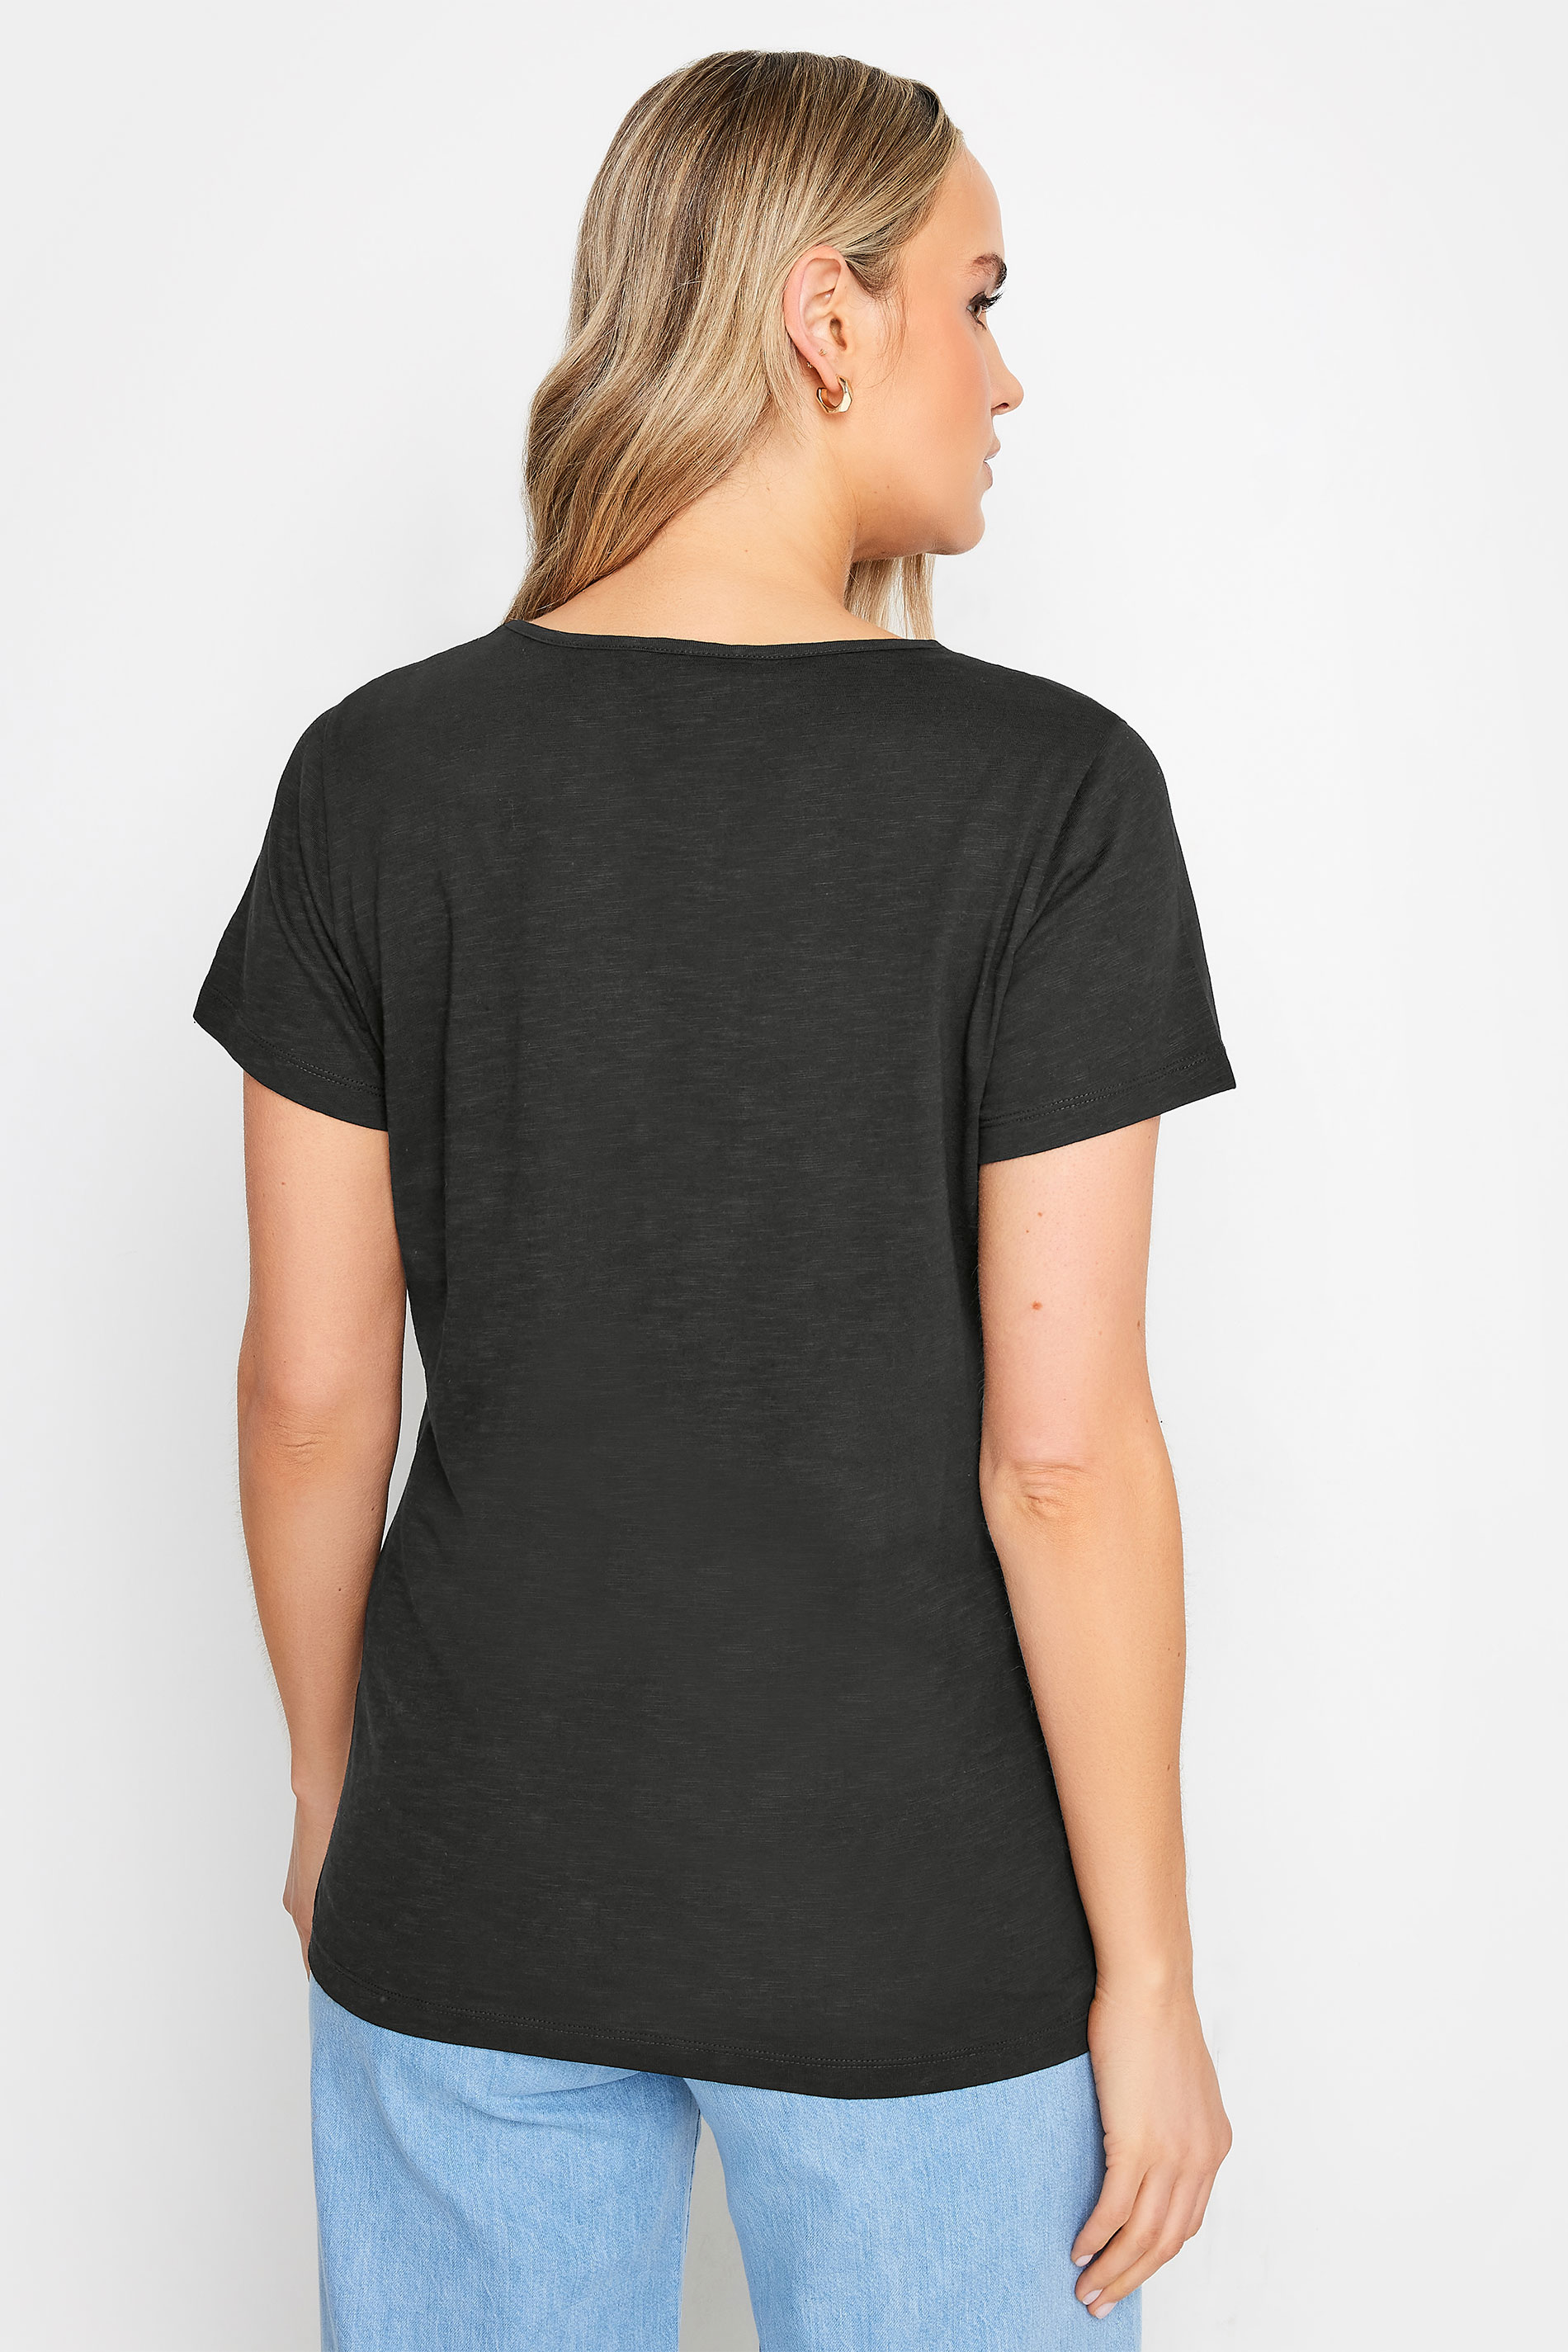 LTS Tall Womens Black Short Sleeve T-Shirt | Long Tall Sally 3